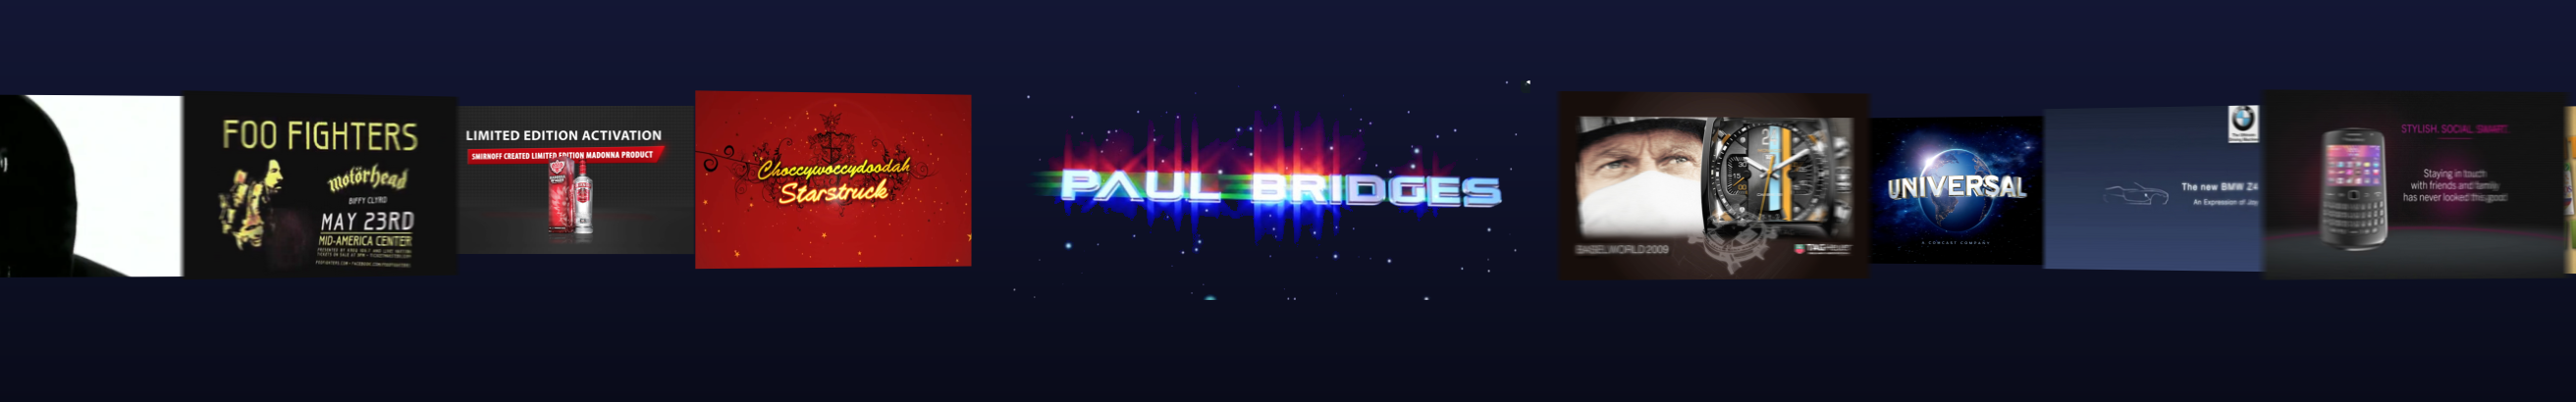 Paul Bridgess profilbanner